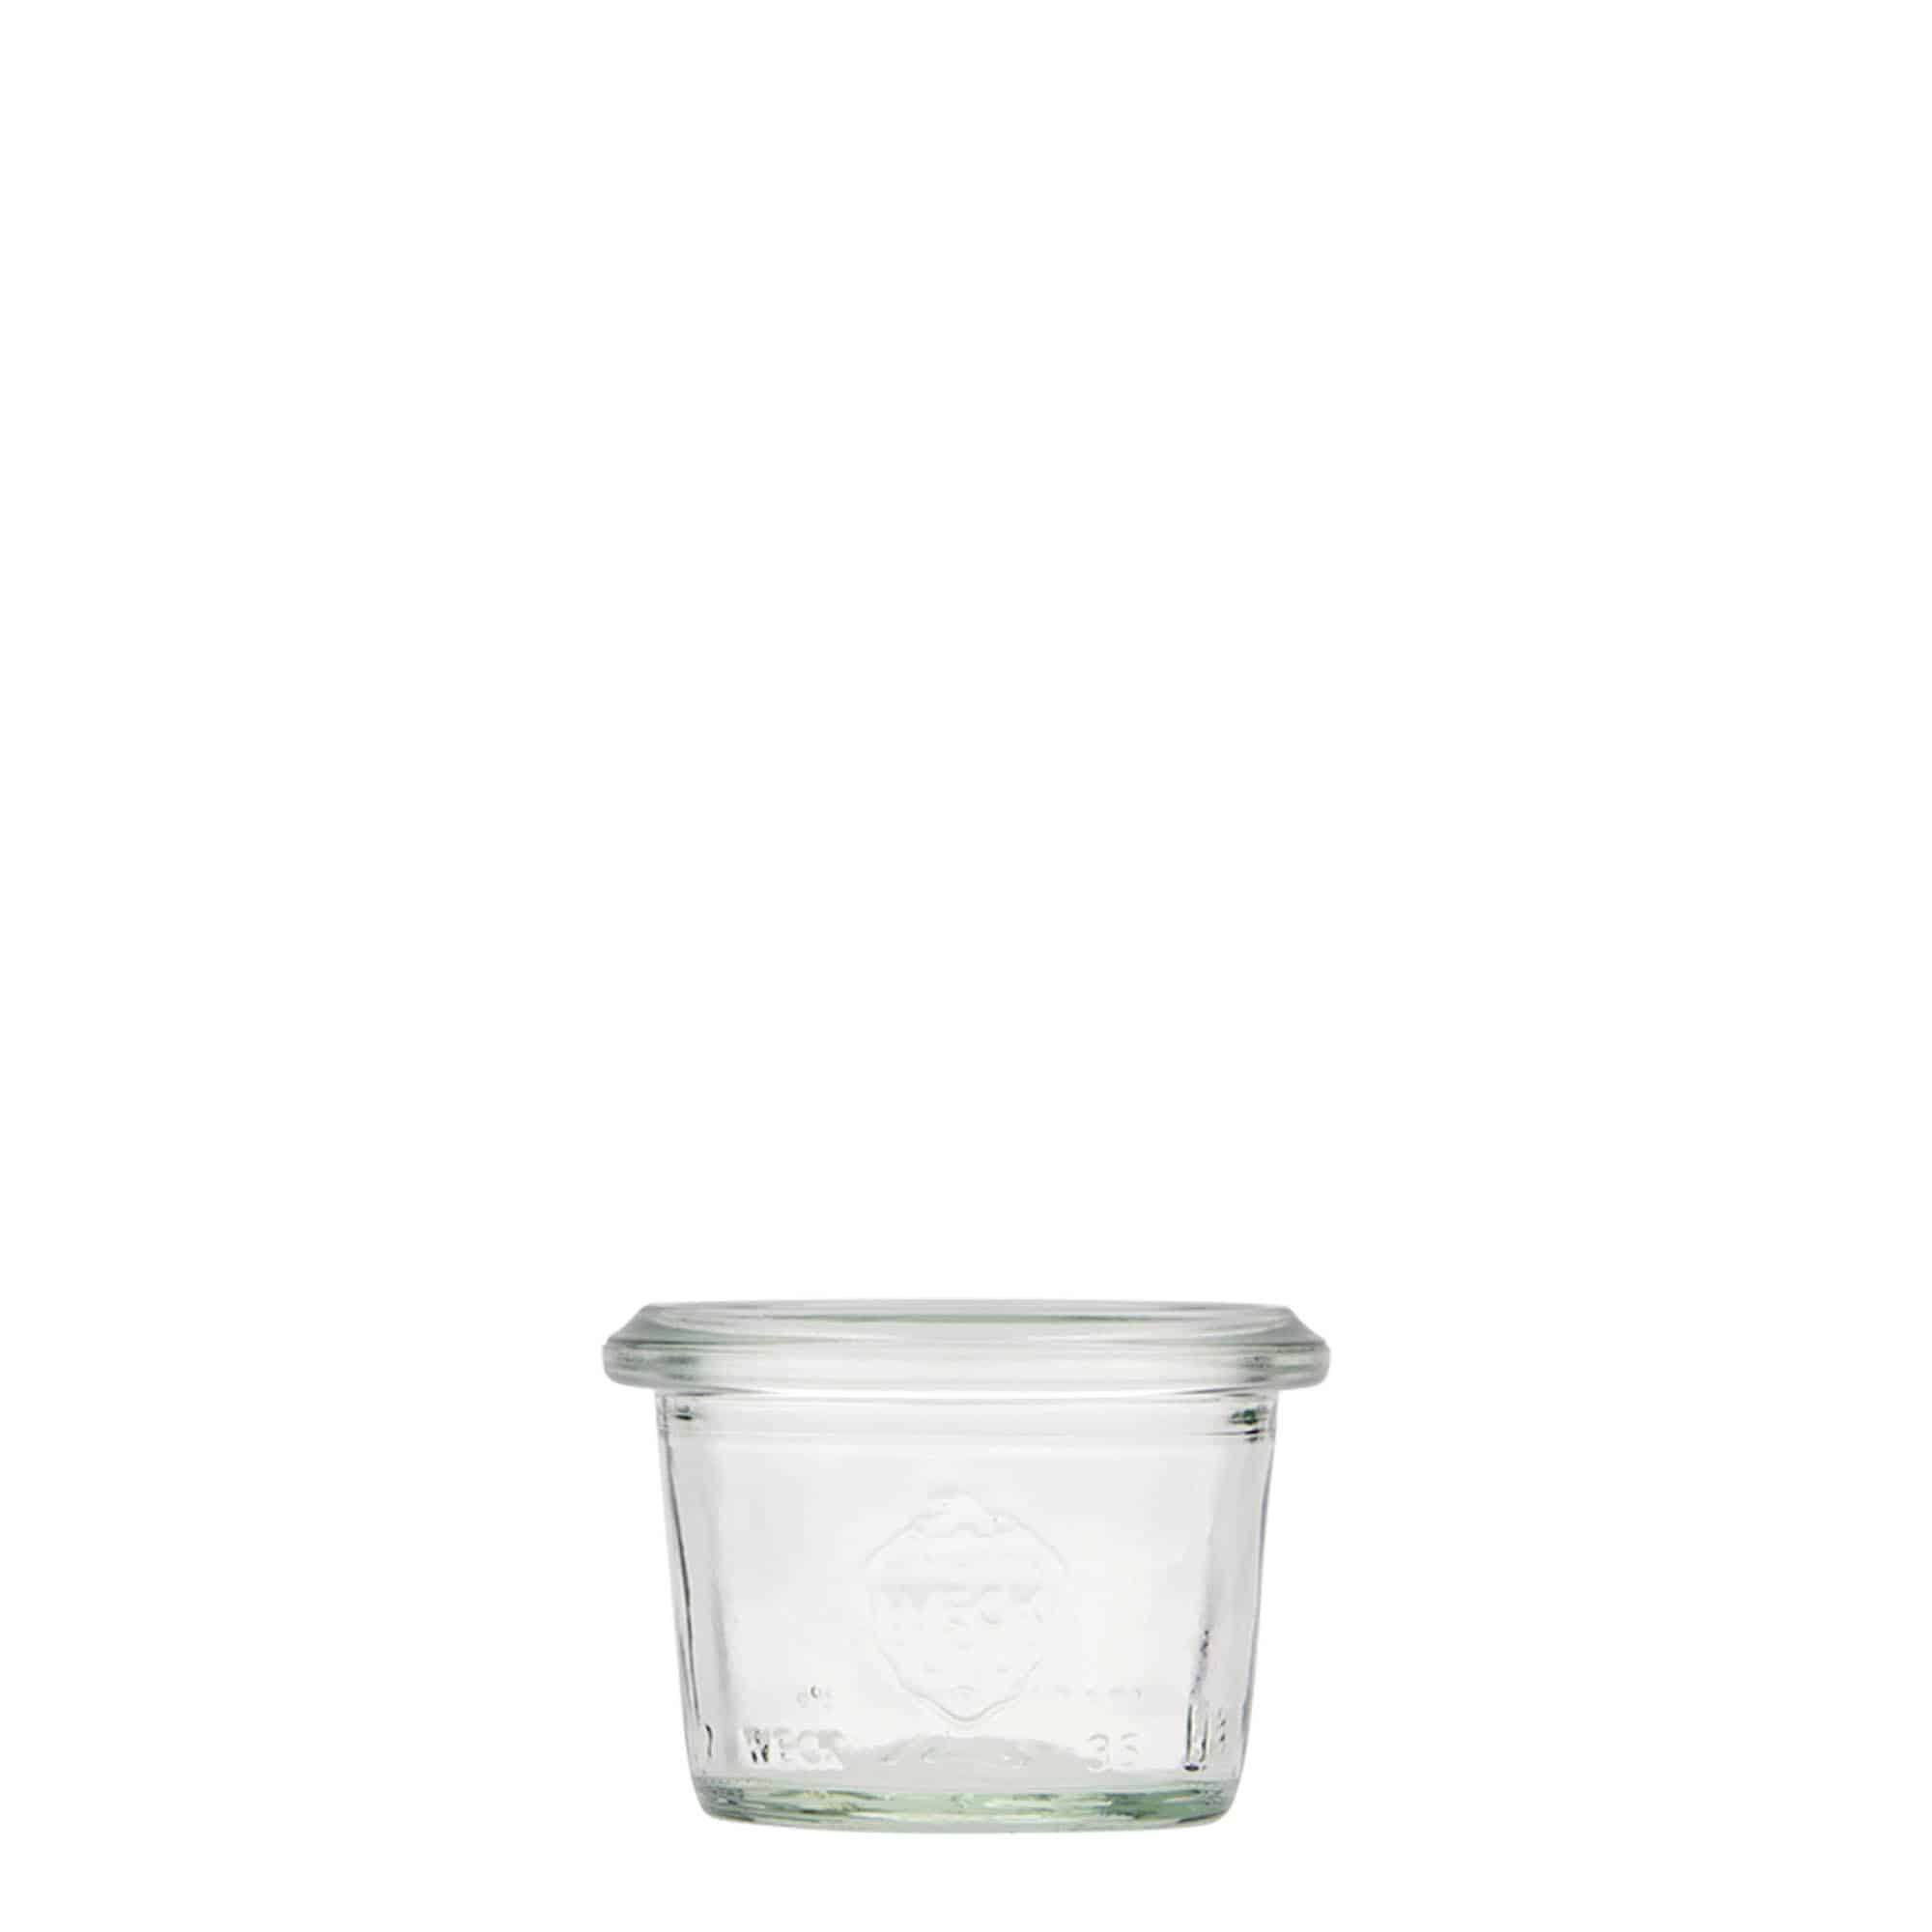 35 ml WECK cylindrical jar, closure: round rim